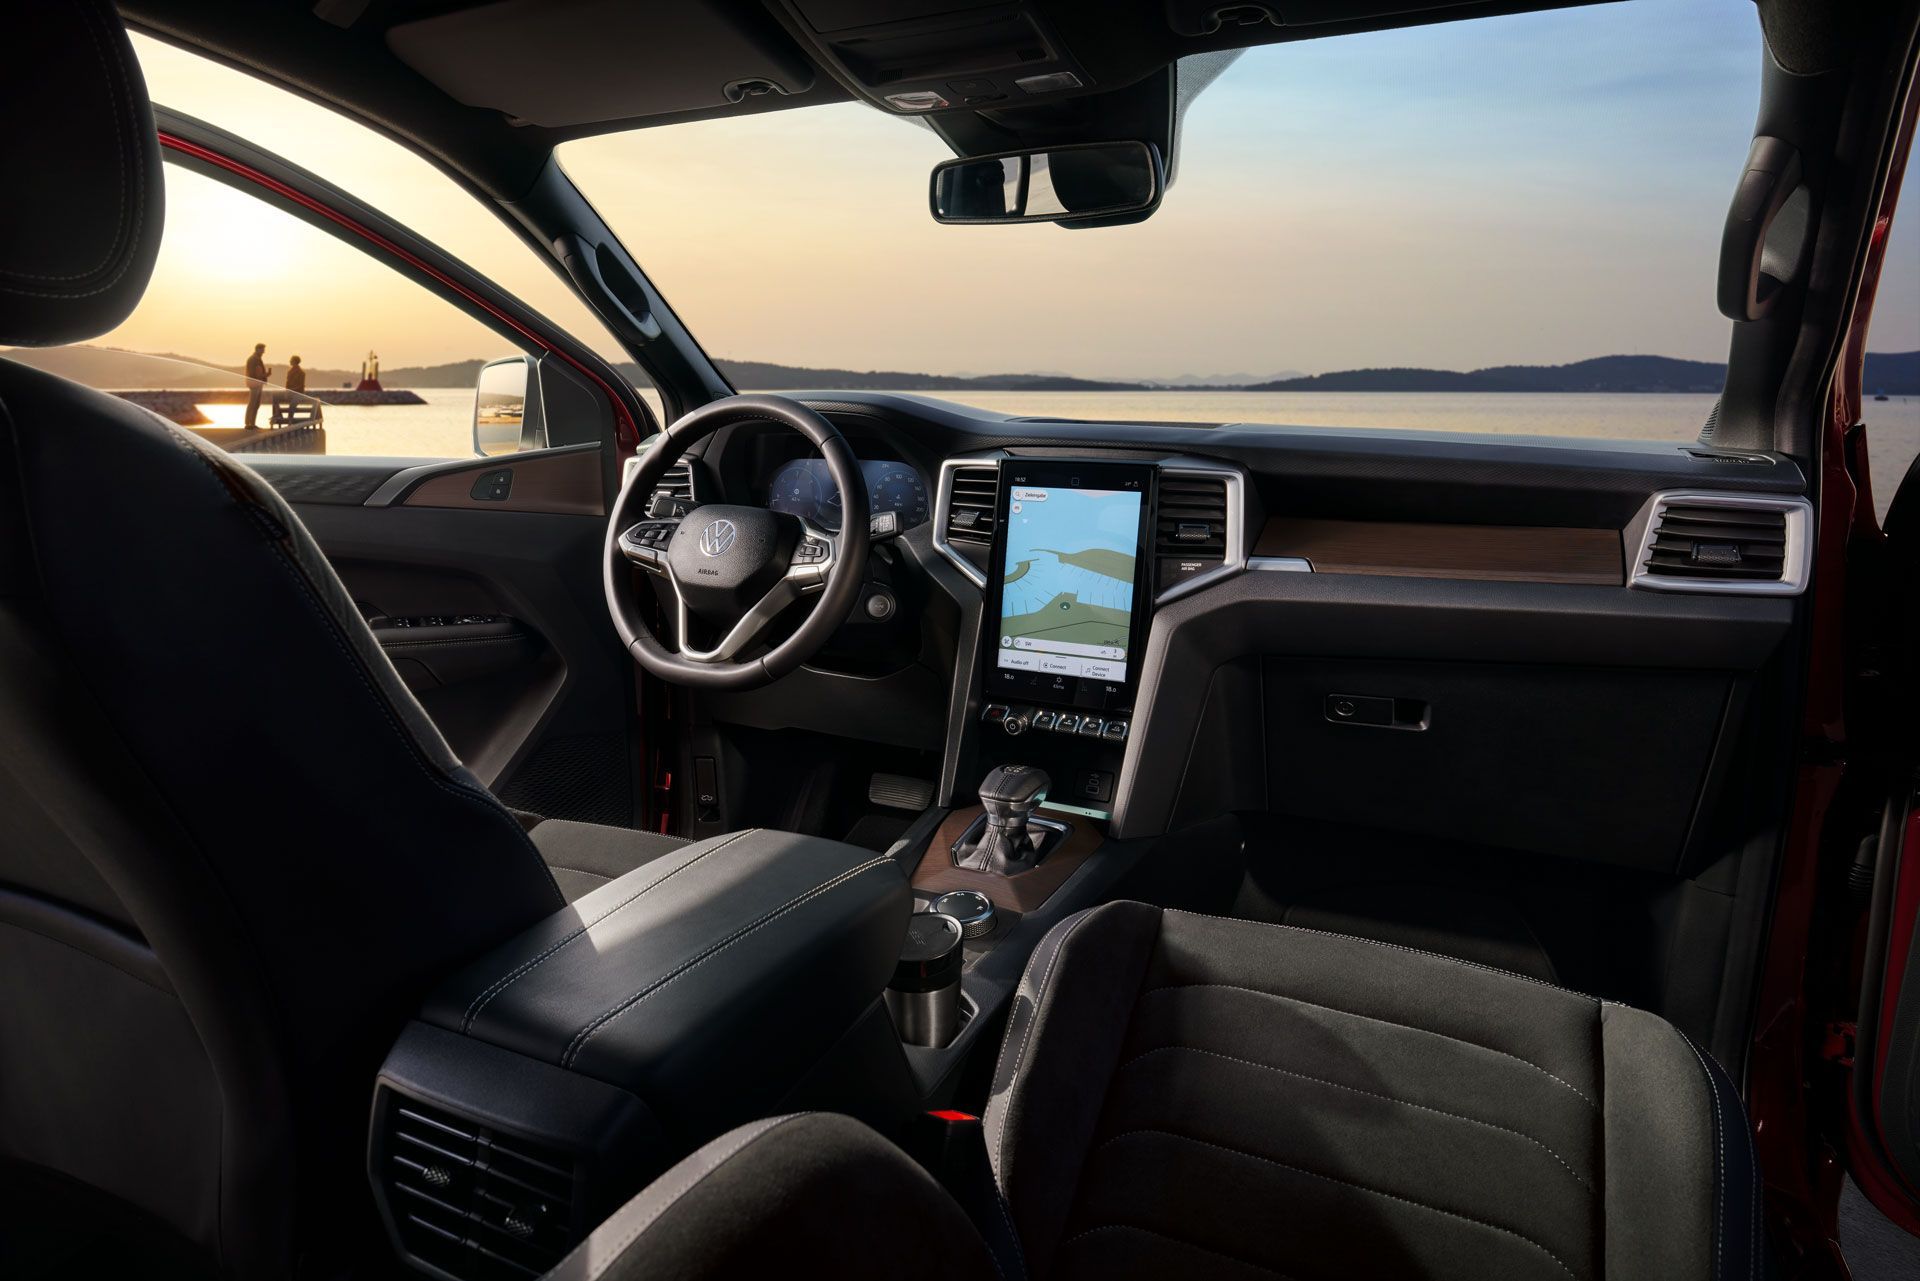 VW amarok style 4motion luxury interior